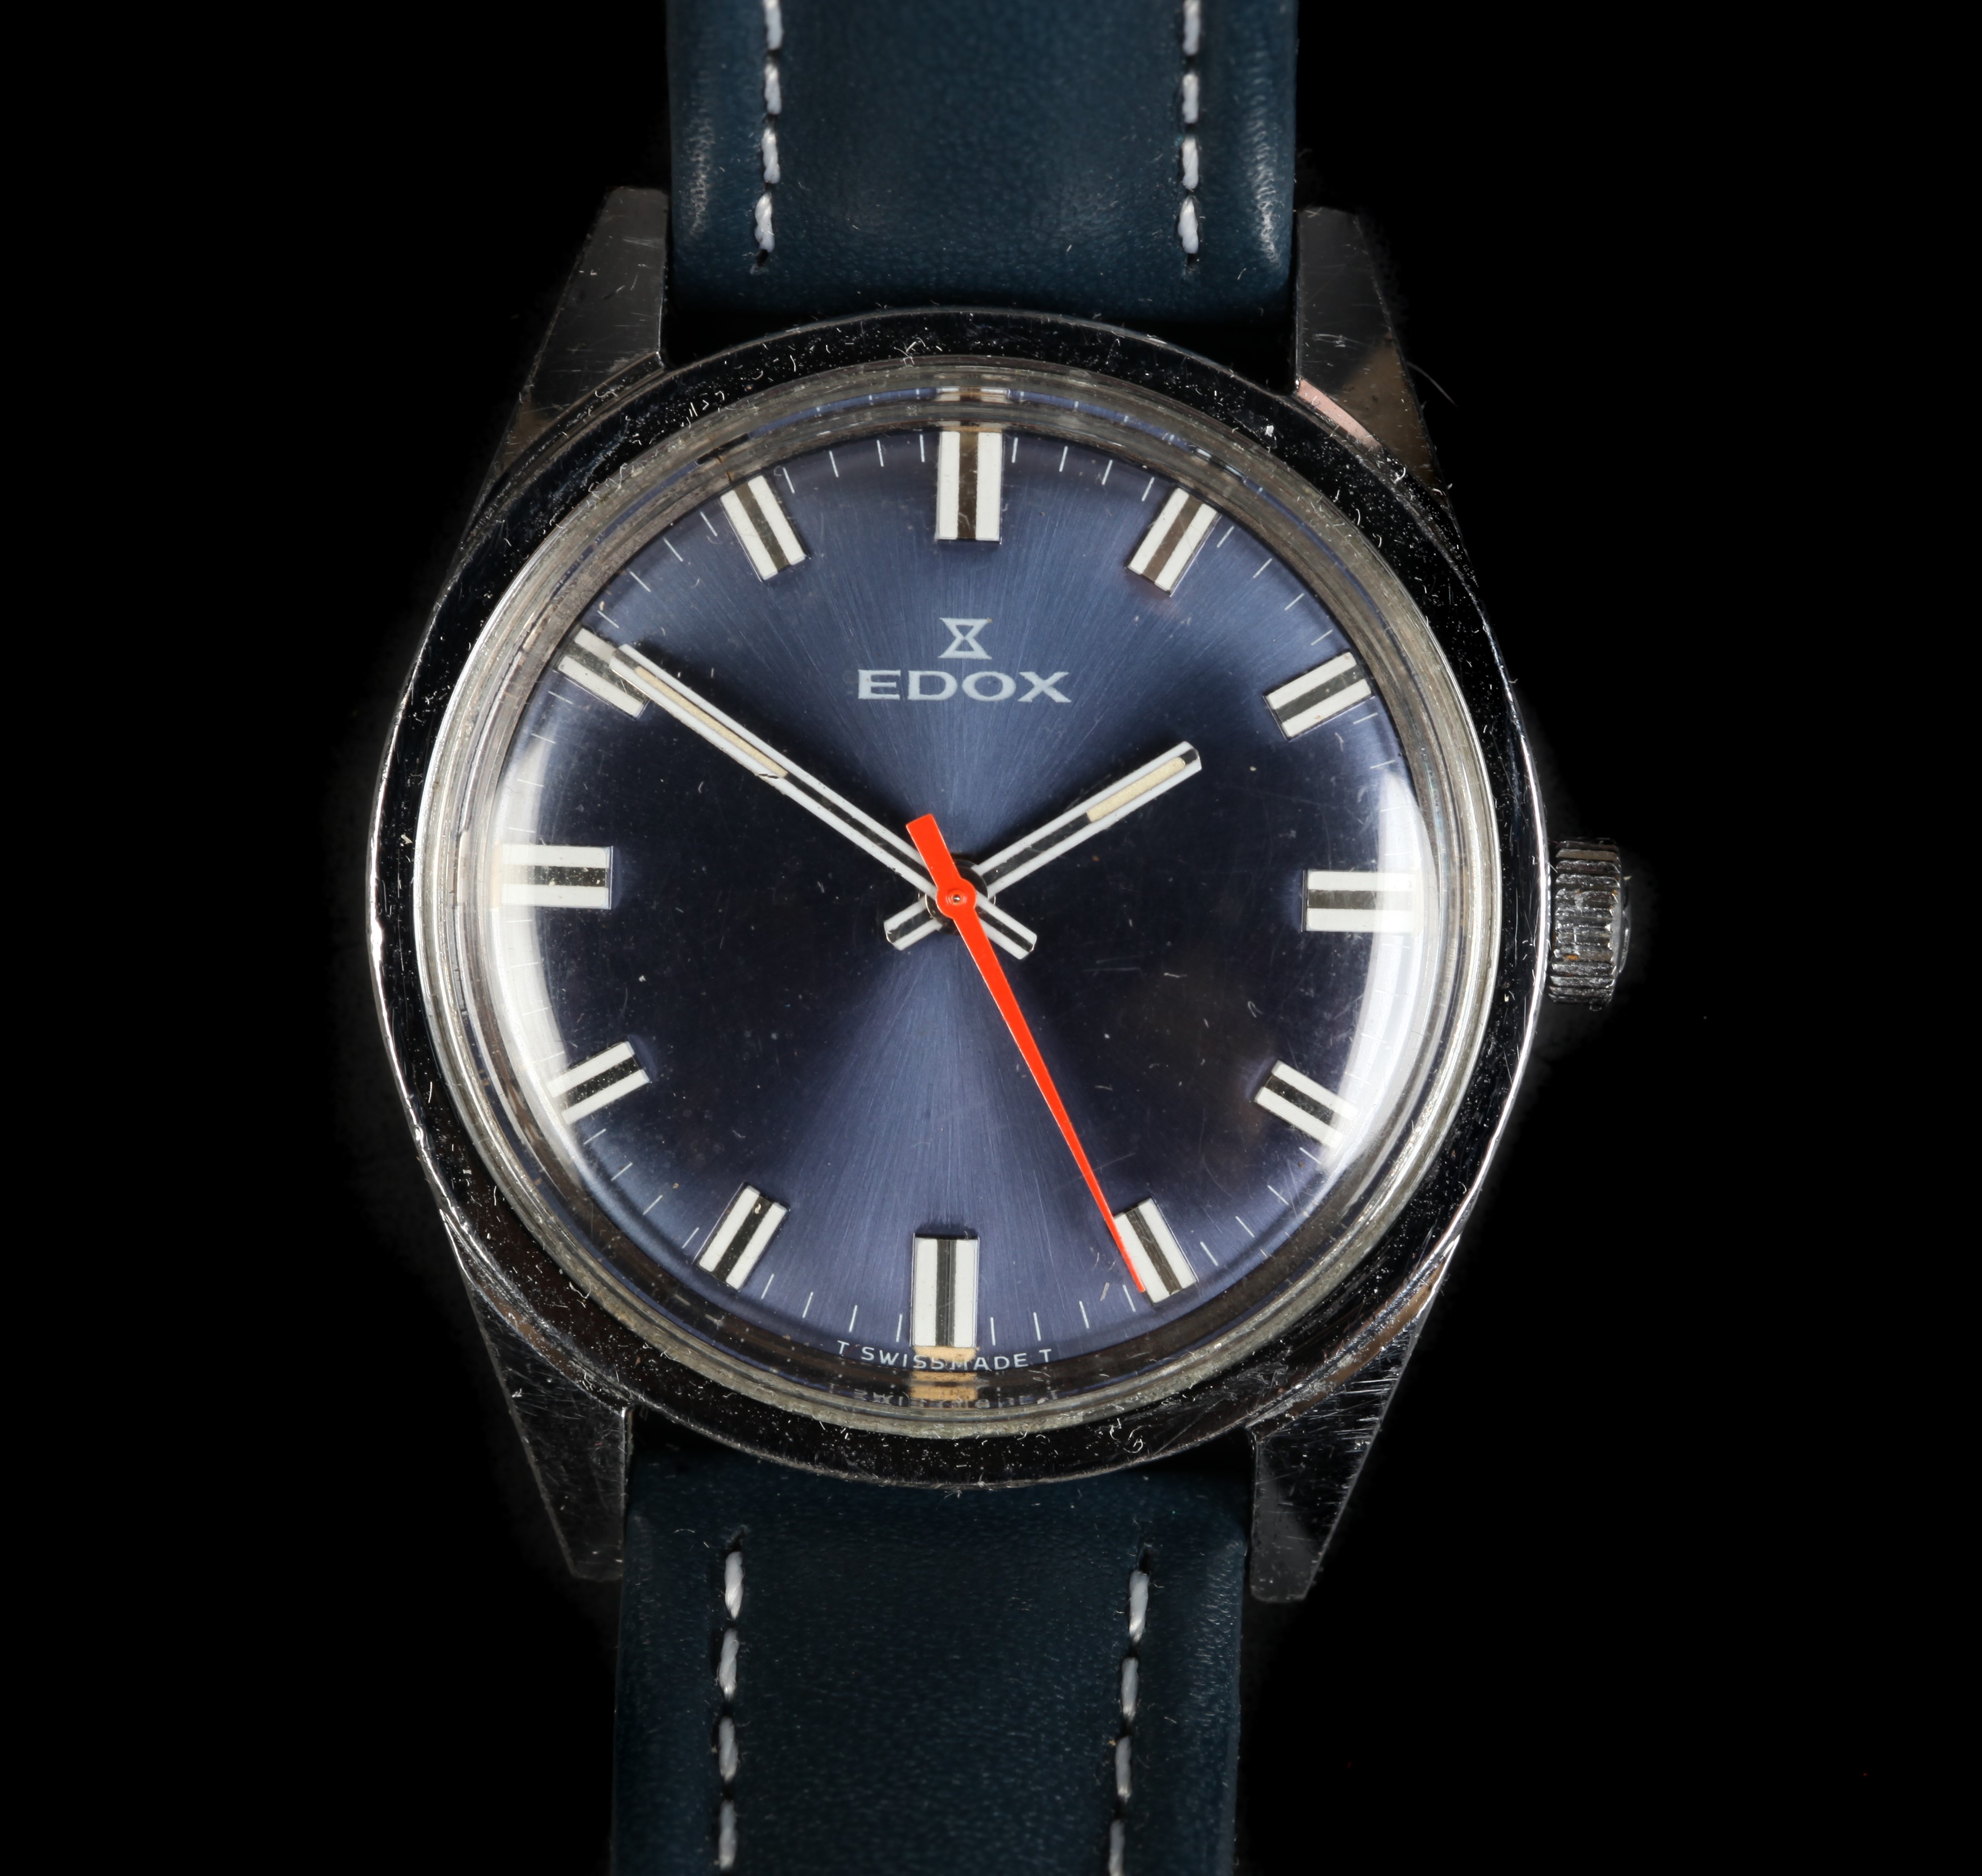 An Edox gentleman's stainless steel wristwatch, c.1970, manual jewel lever movement, metallic blue